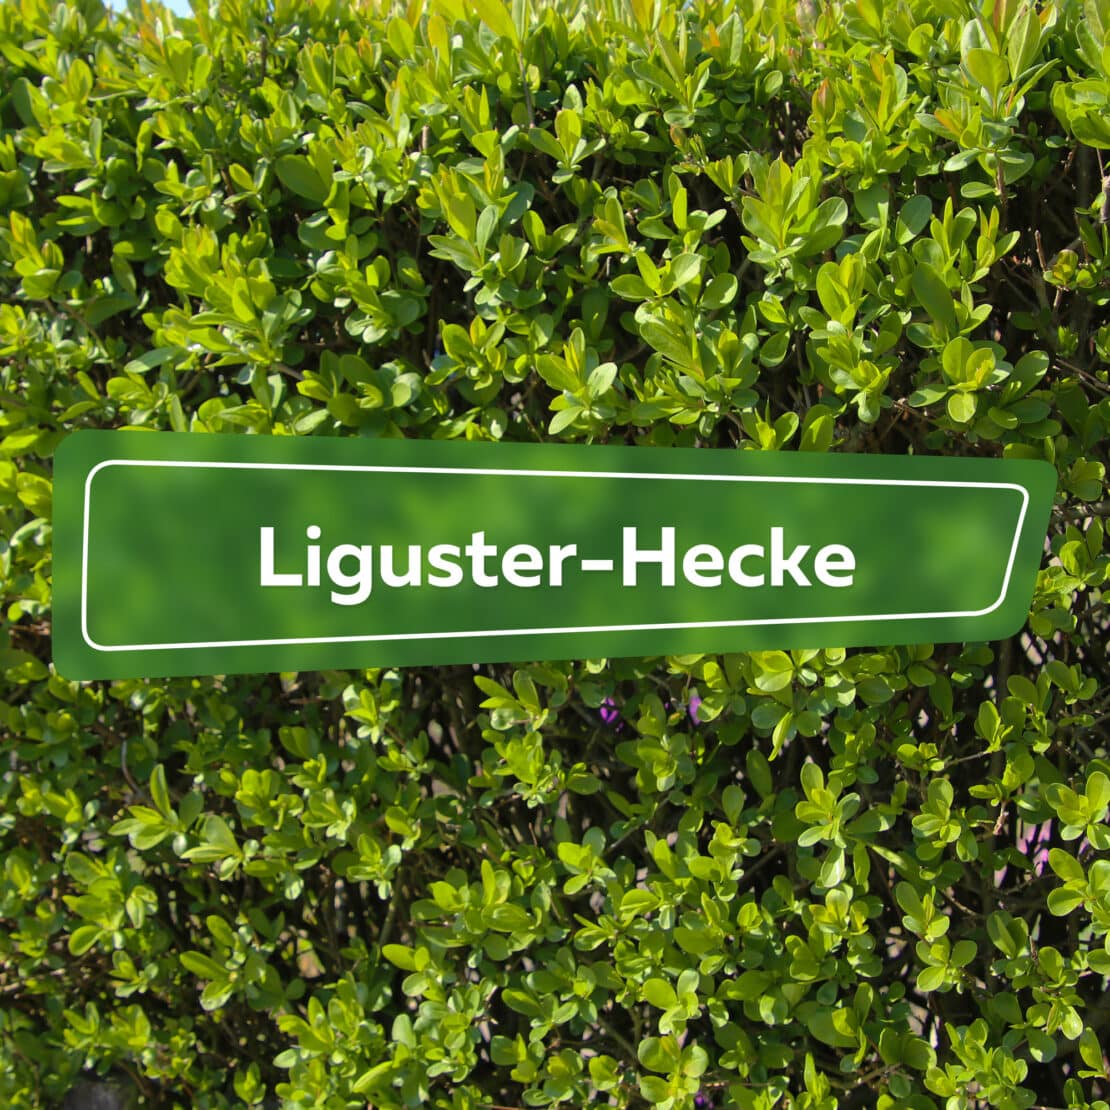 Liguster-Hecke